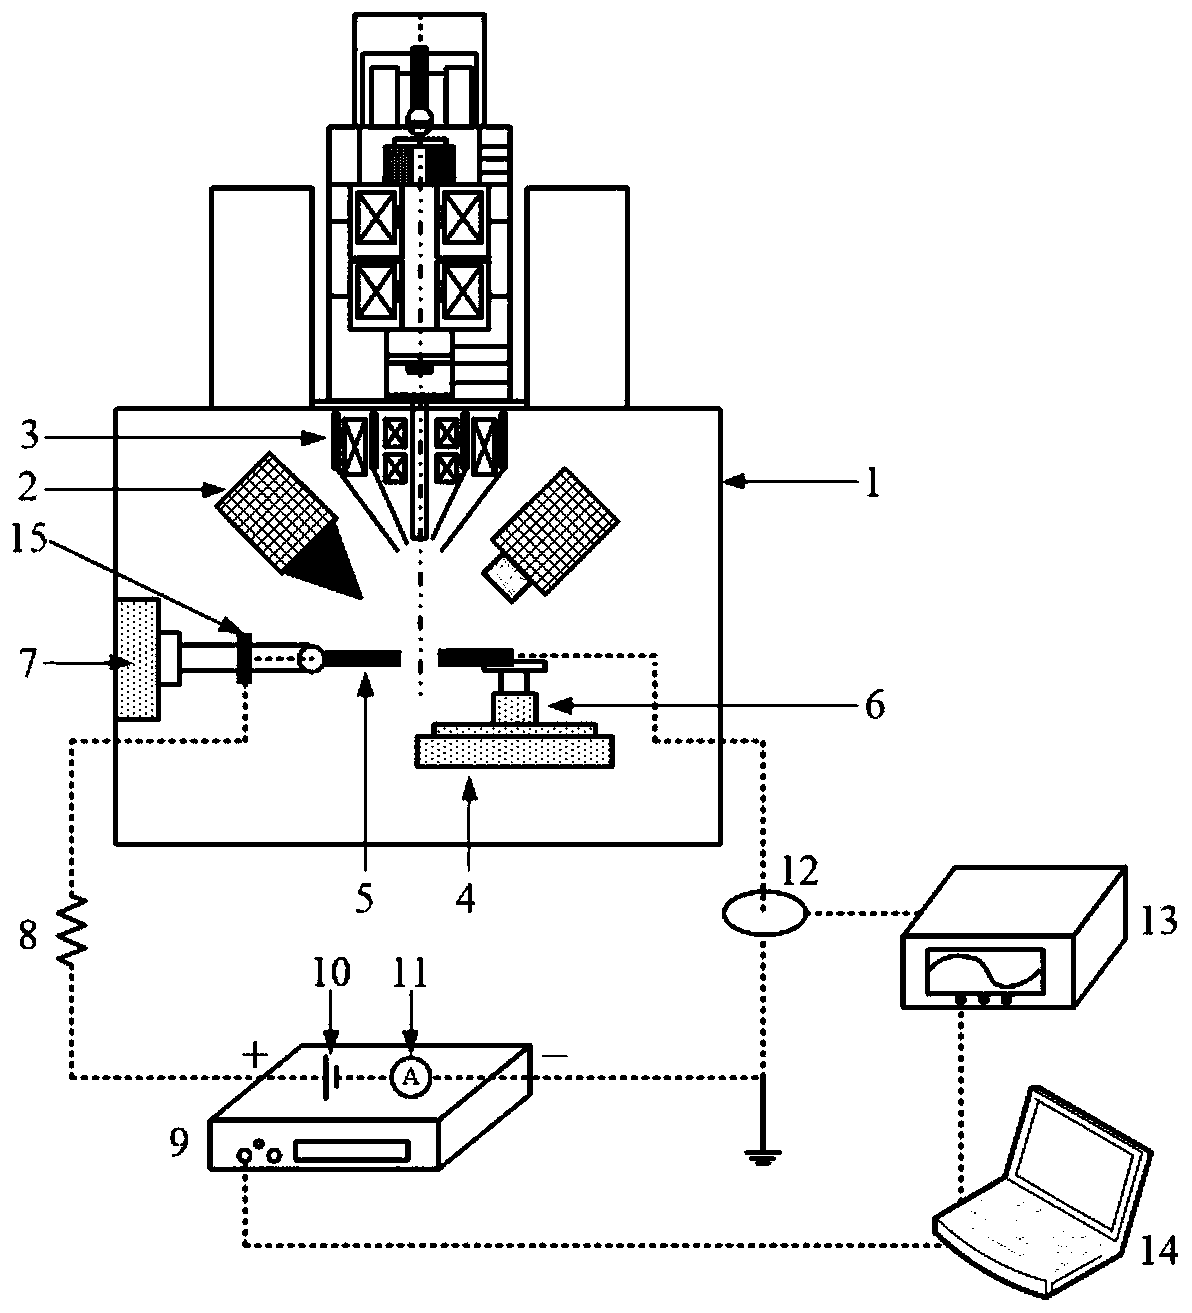 Nano-vacuum gap breakdown characteristic experimental device and method based on FIB-SEM two-beam system